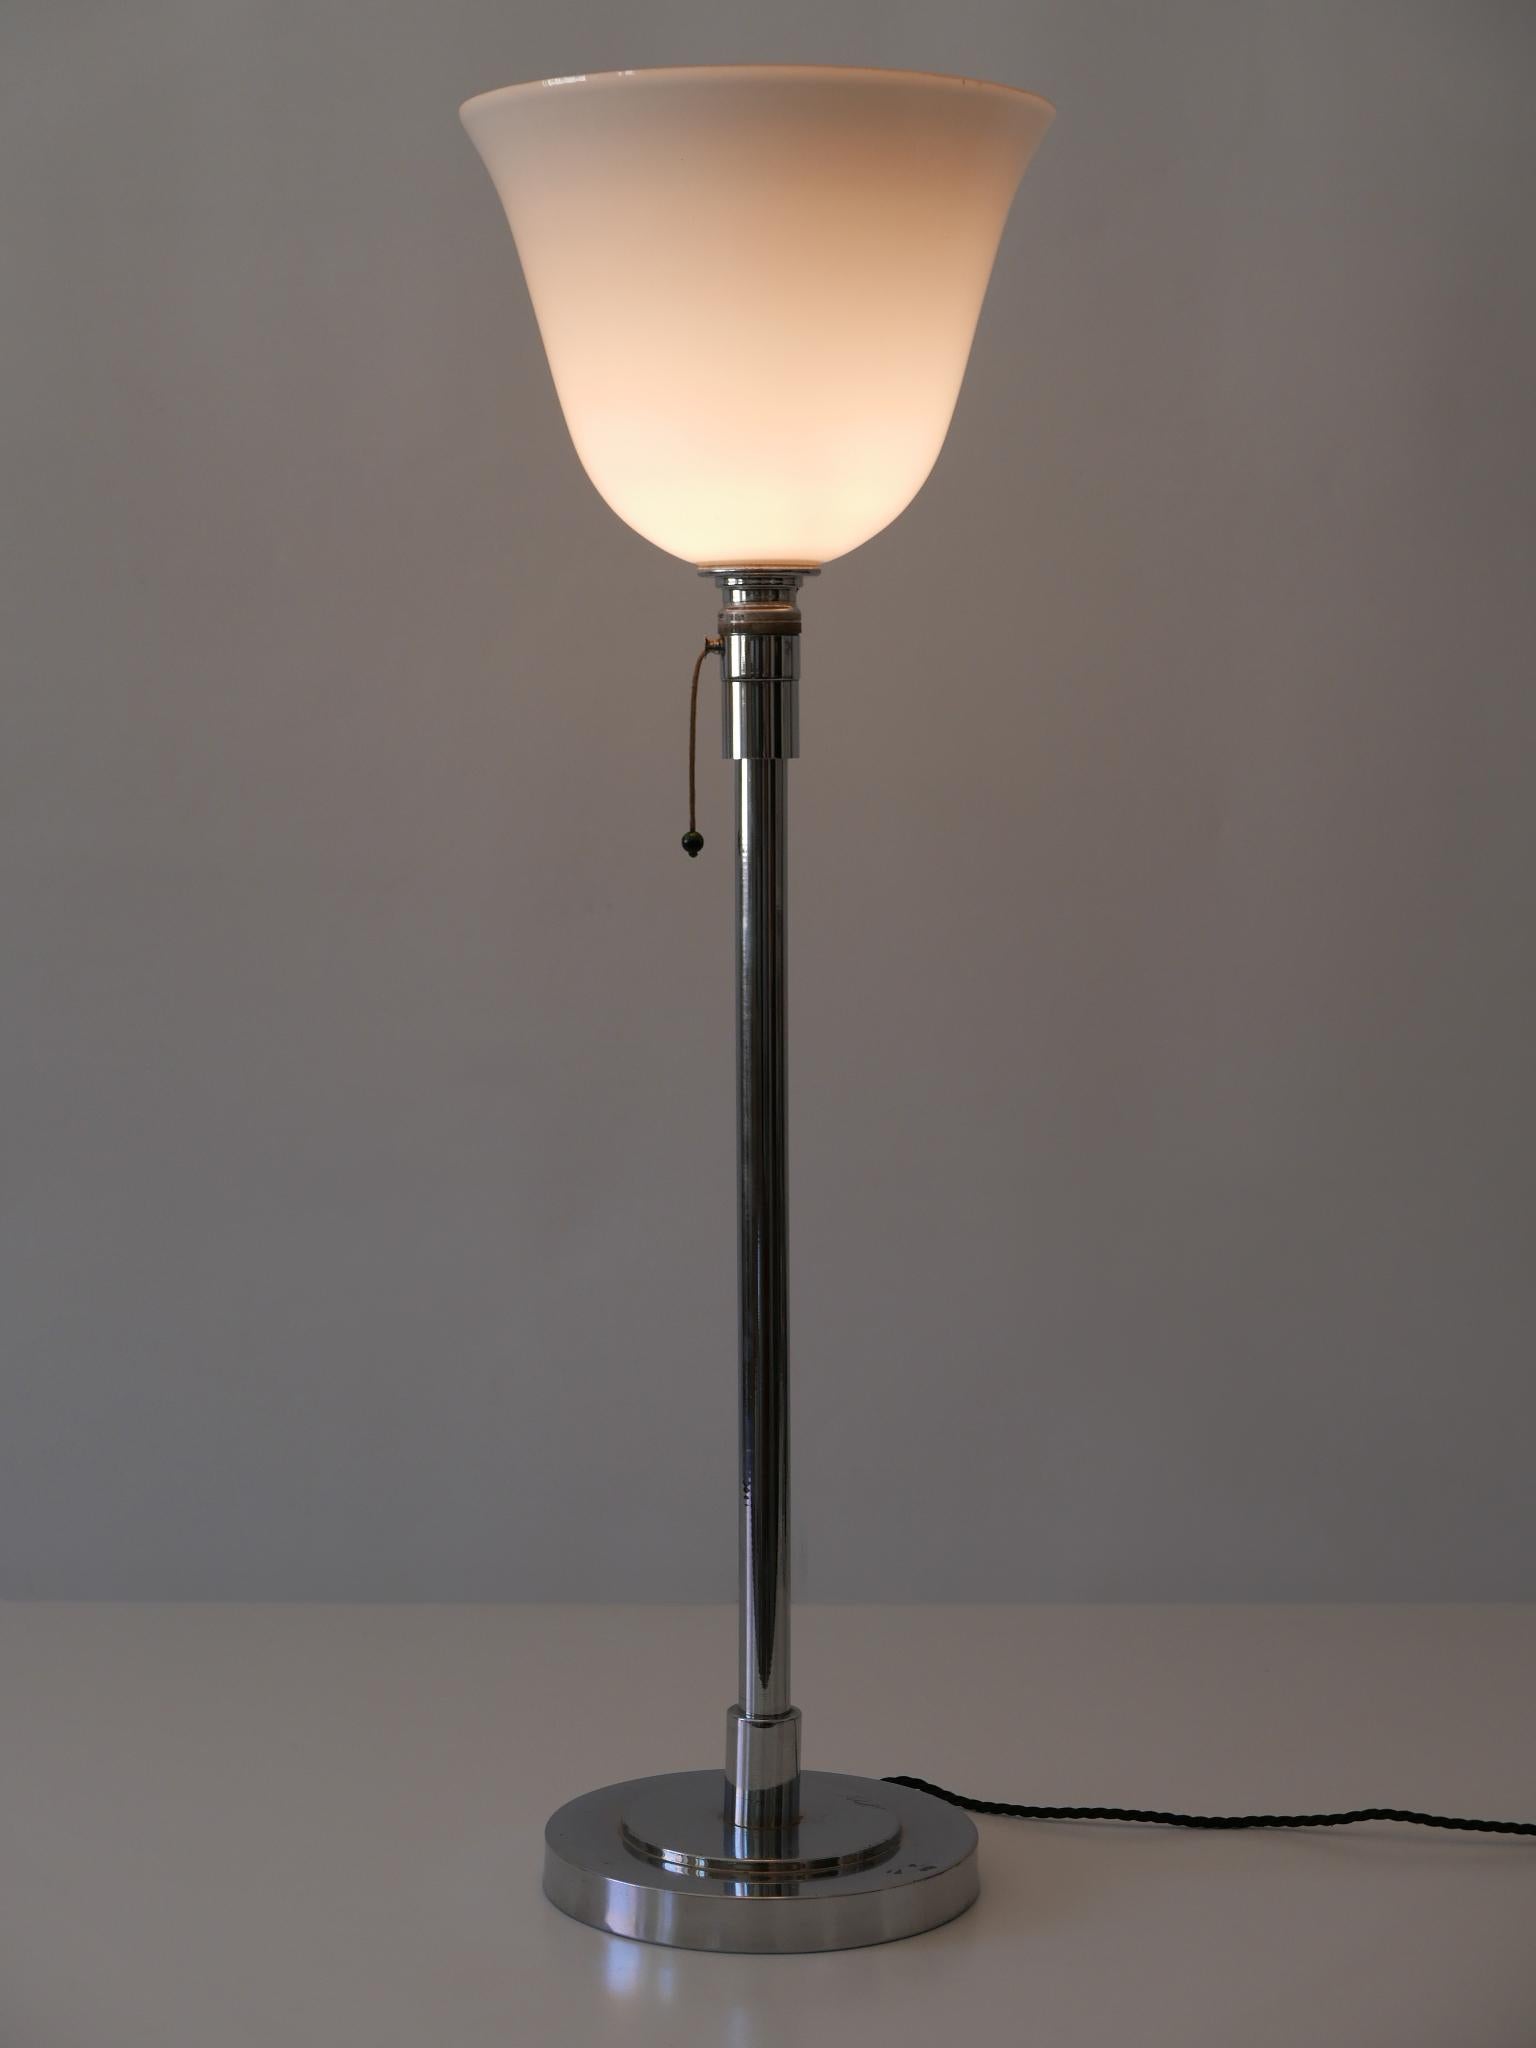 Elegant Art Deco Bauhaus Table Lamp or Floor Light by Mazda Paris, France, 1930s For Sale 2